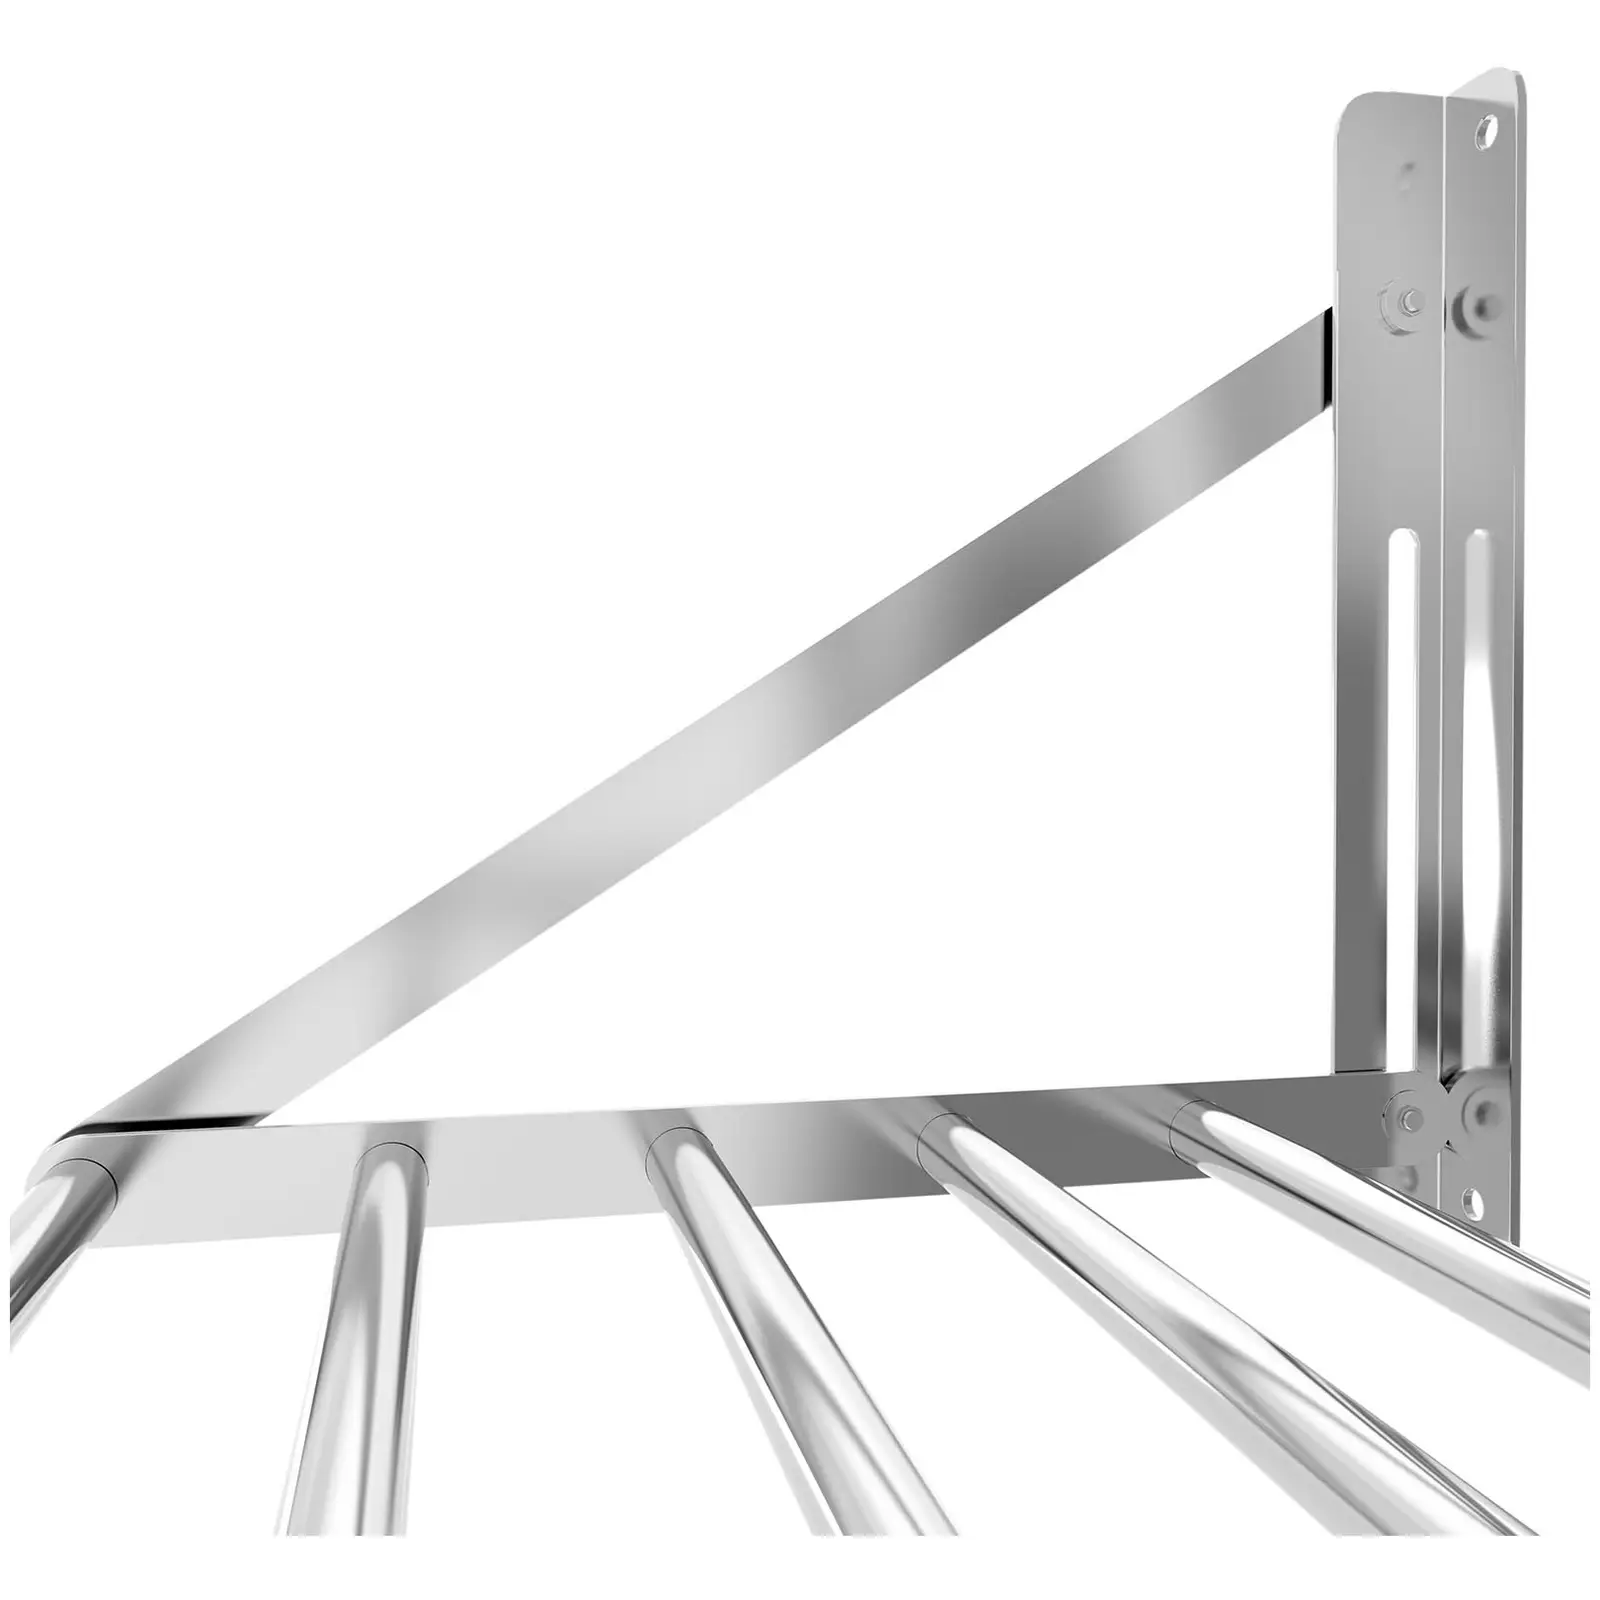 Wall shelf - foldable - bar design - 80 x 45 cm - 40 kg - stainless steel